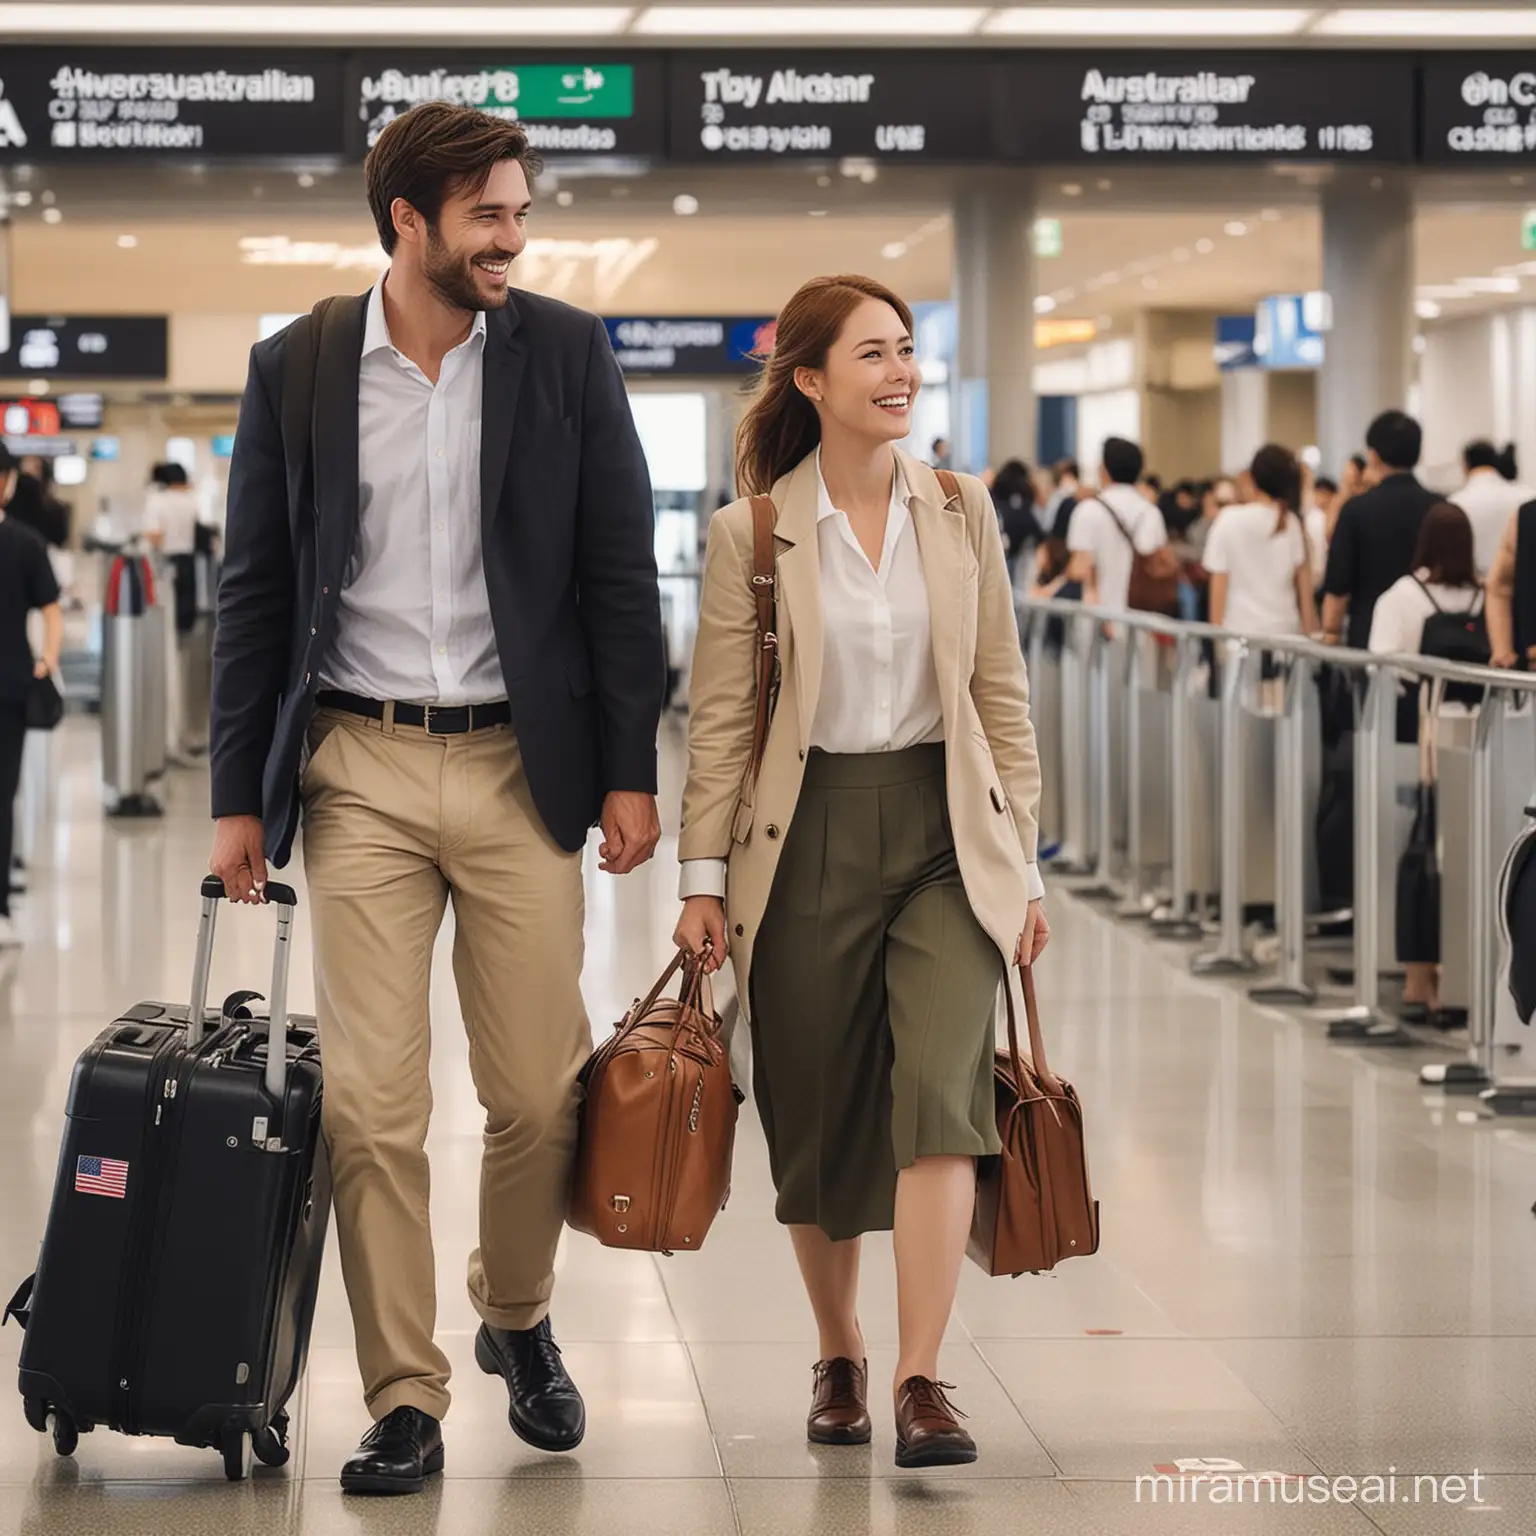 American Man and Australian Woman Smiling at Tokyo Airport